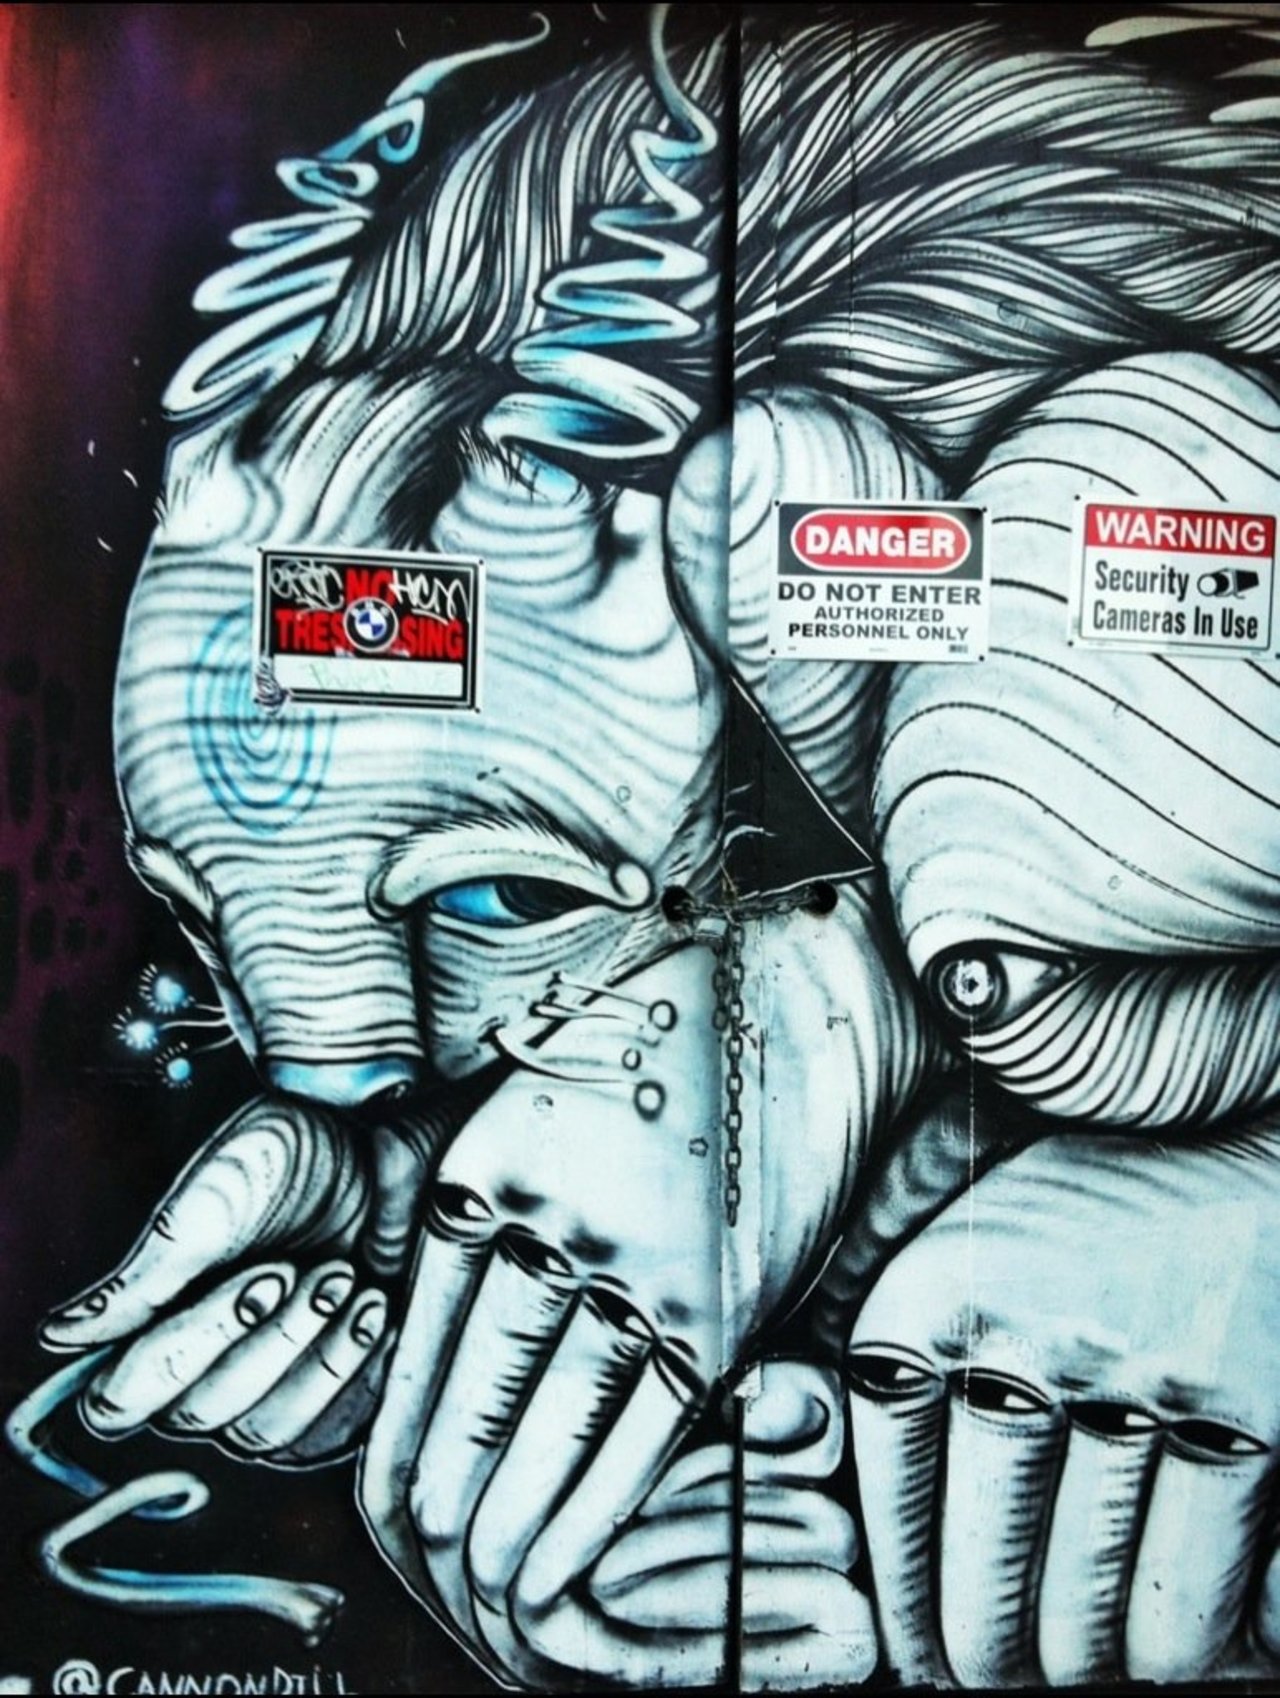 RT @billlambertson: San Francisco, Ca/USA #sf #graffiti #streetart https://t.co/5NxnJNVXsa